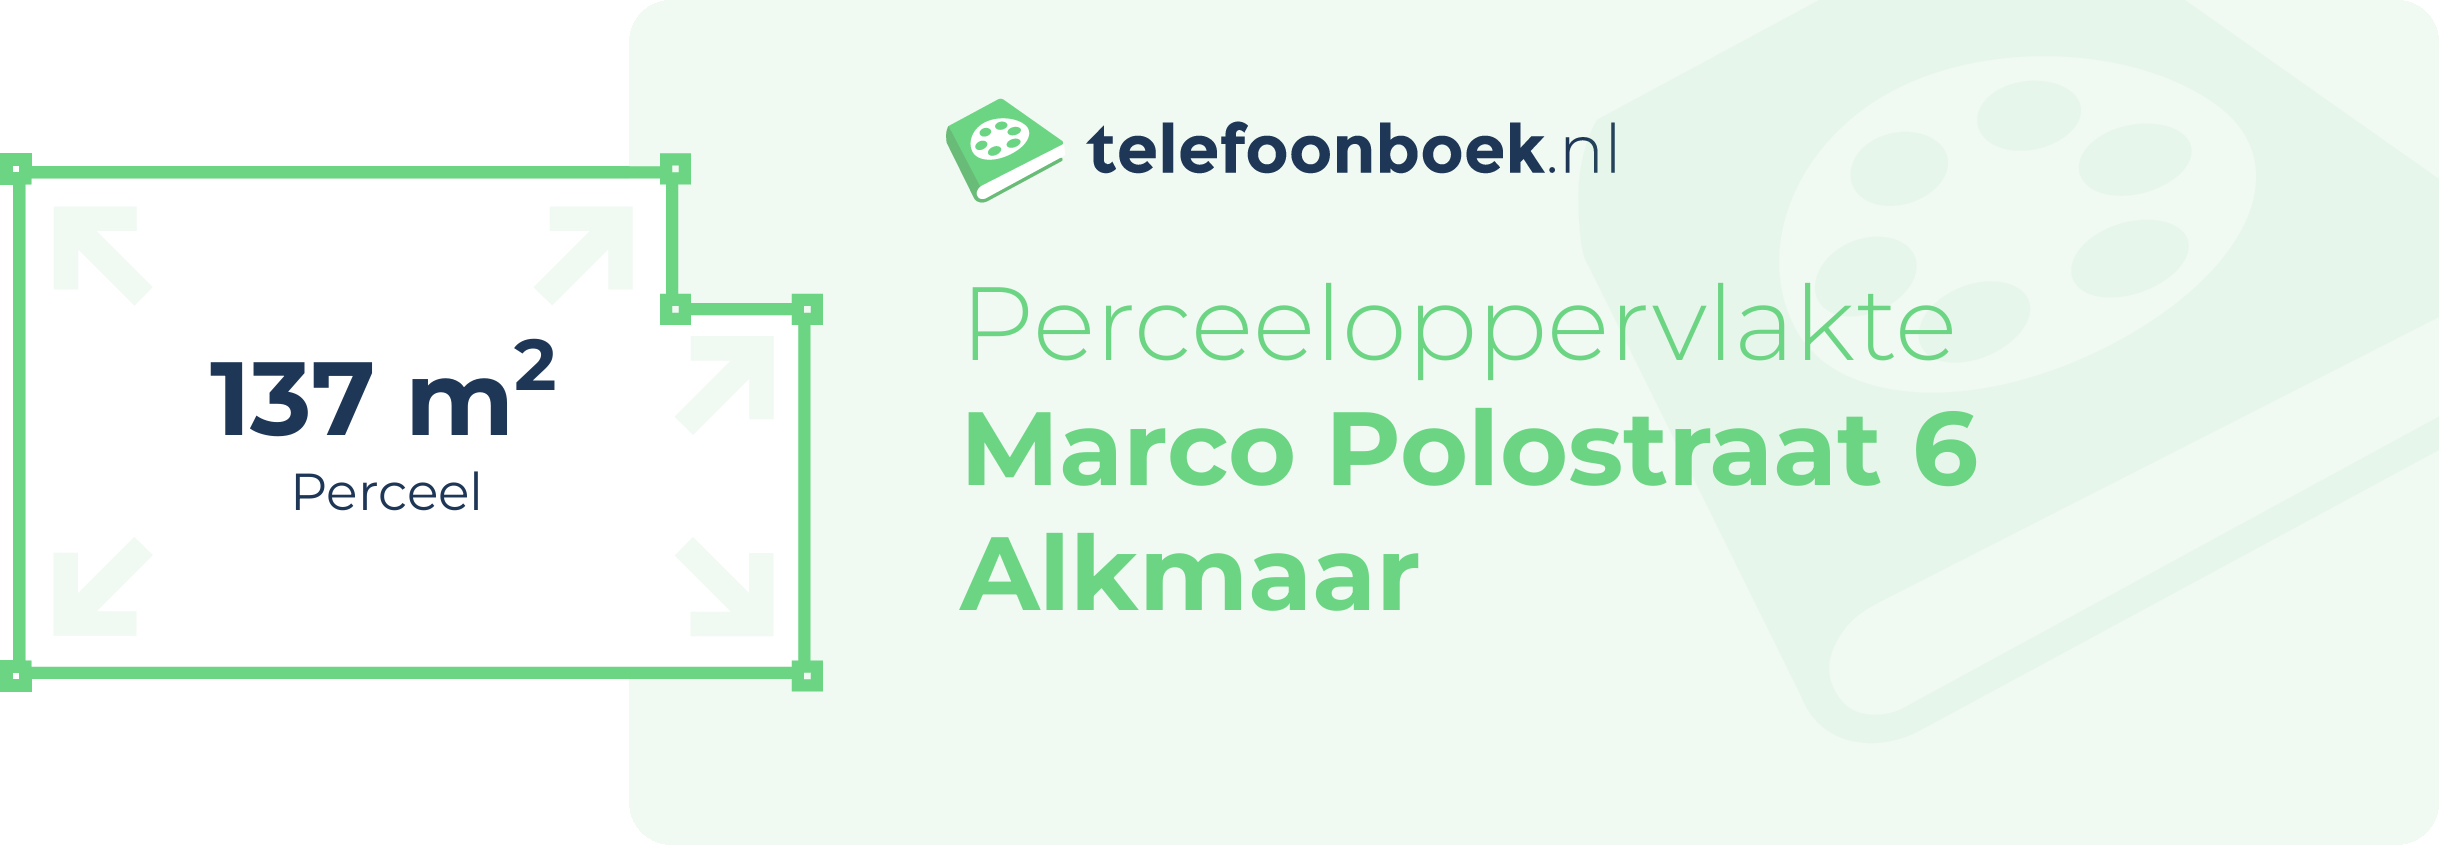 Perceeloppervlakte Marco Polostraat 6 Alkmaar